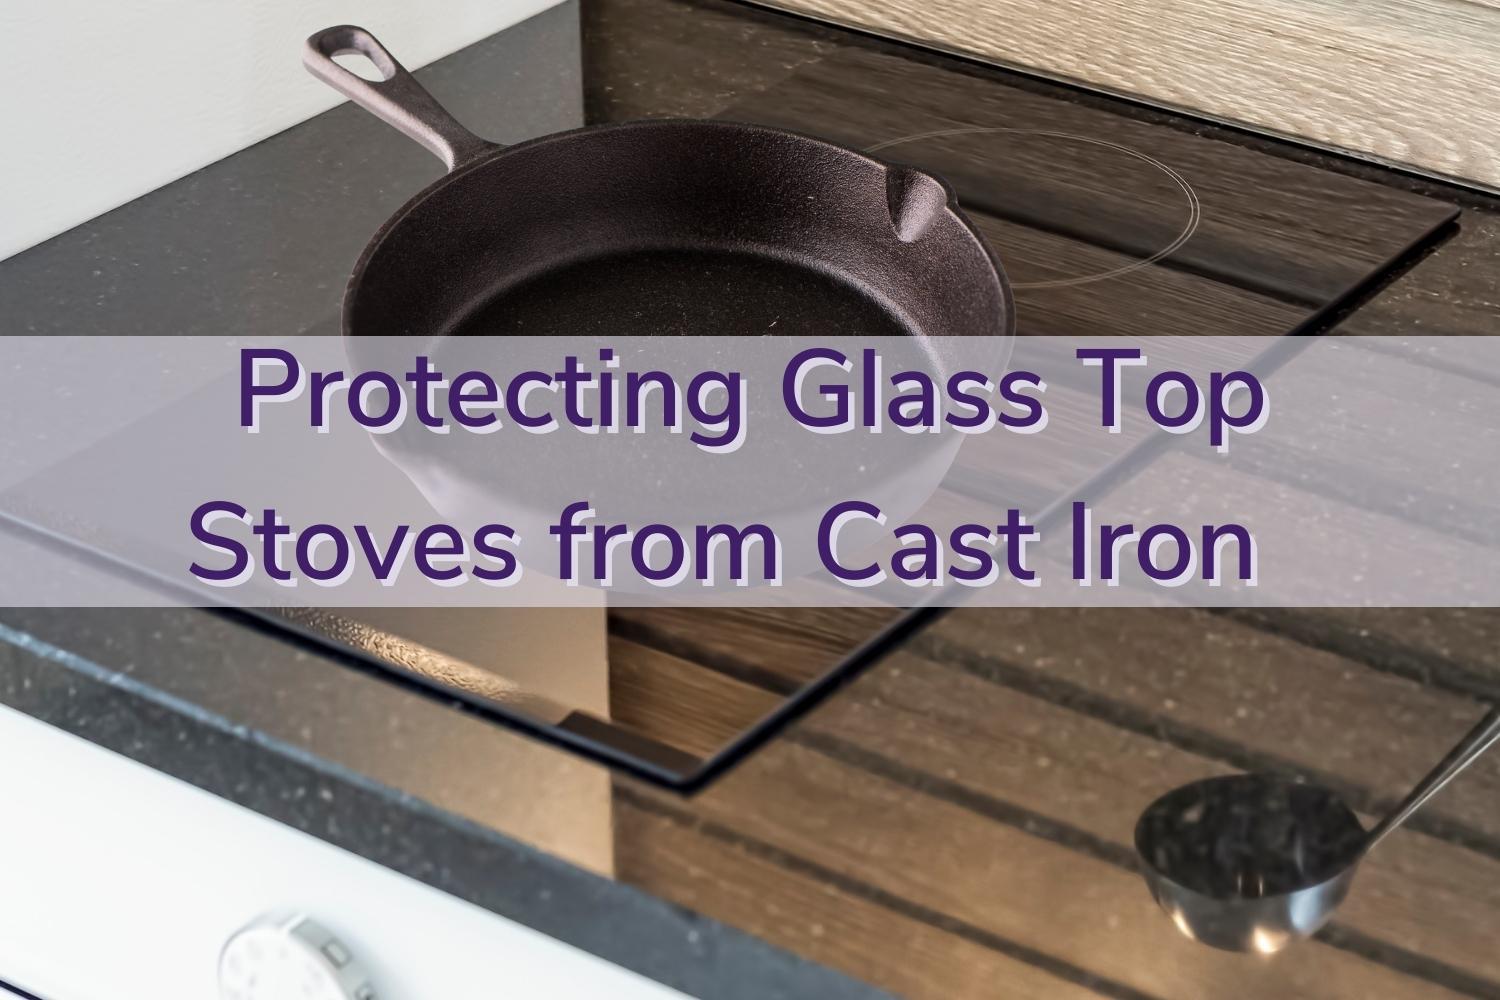 https://clankitchen.com/wp-content/uploads/2021/11/protect-glass-stove-cast-iron.jpg